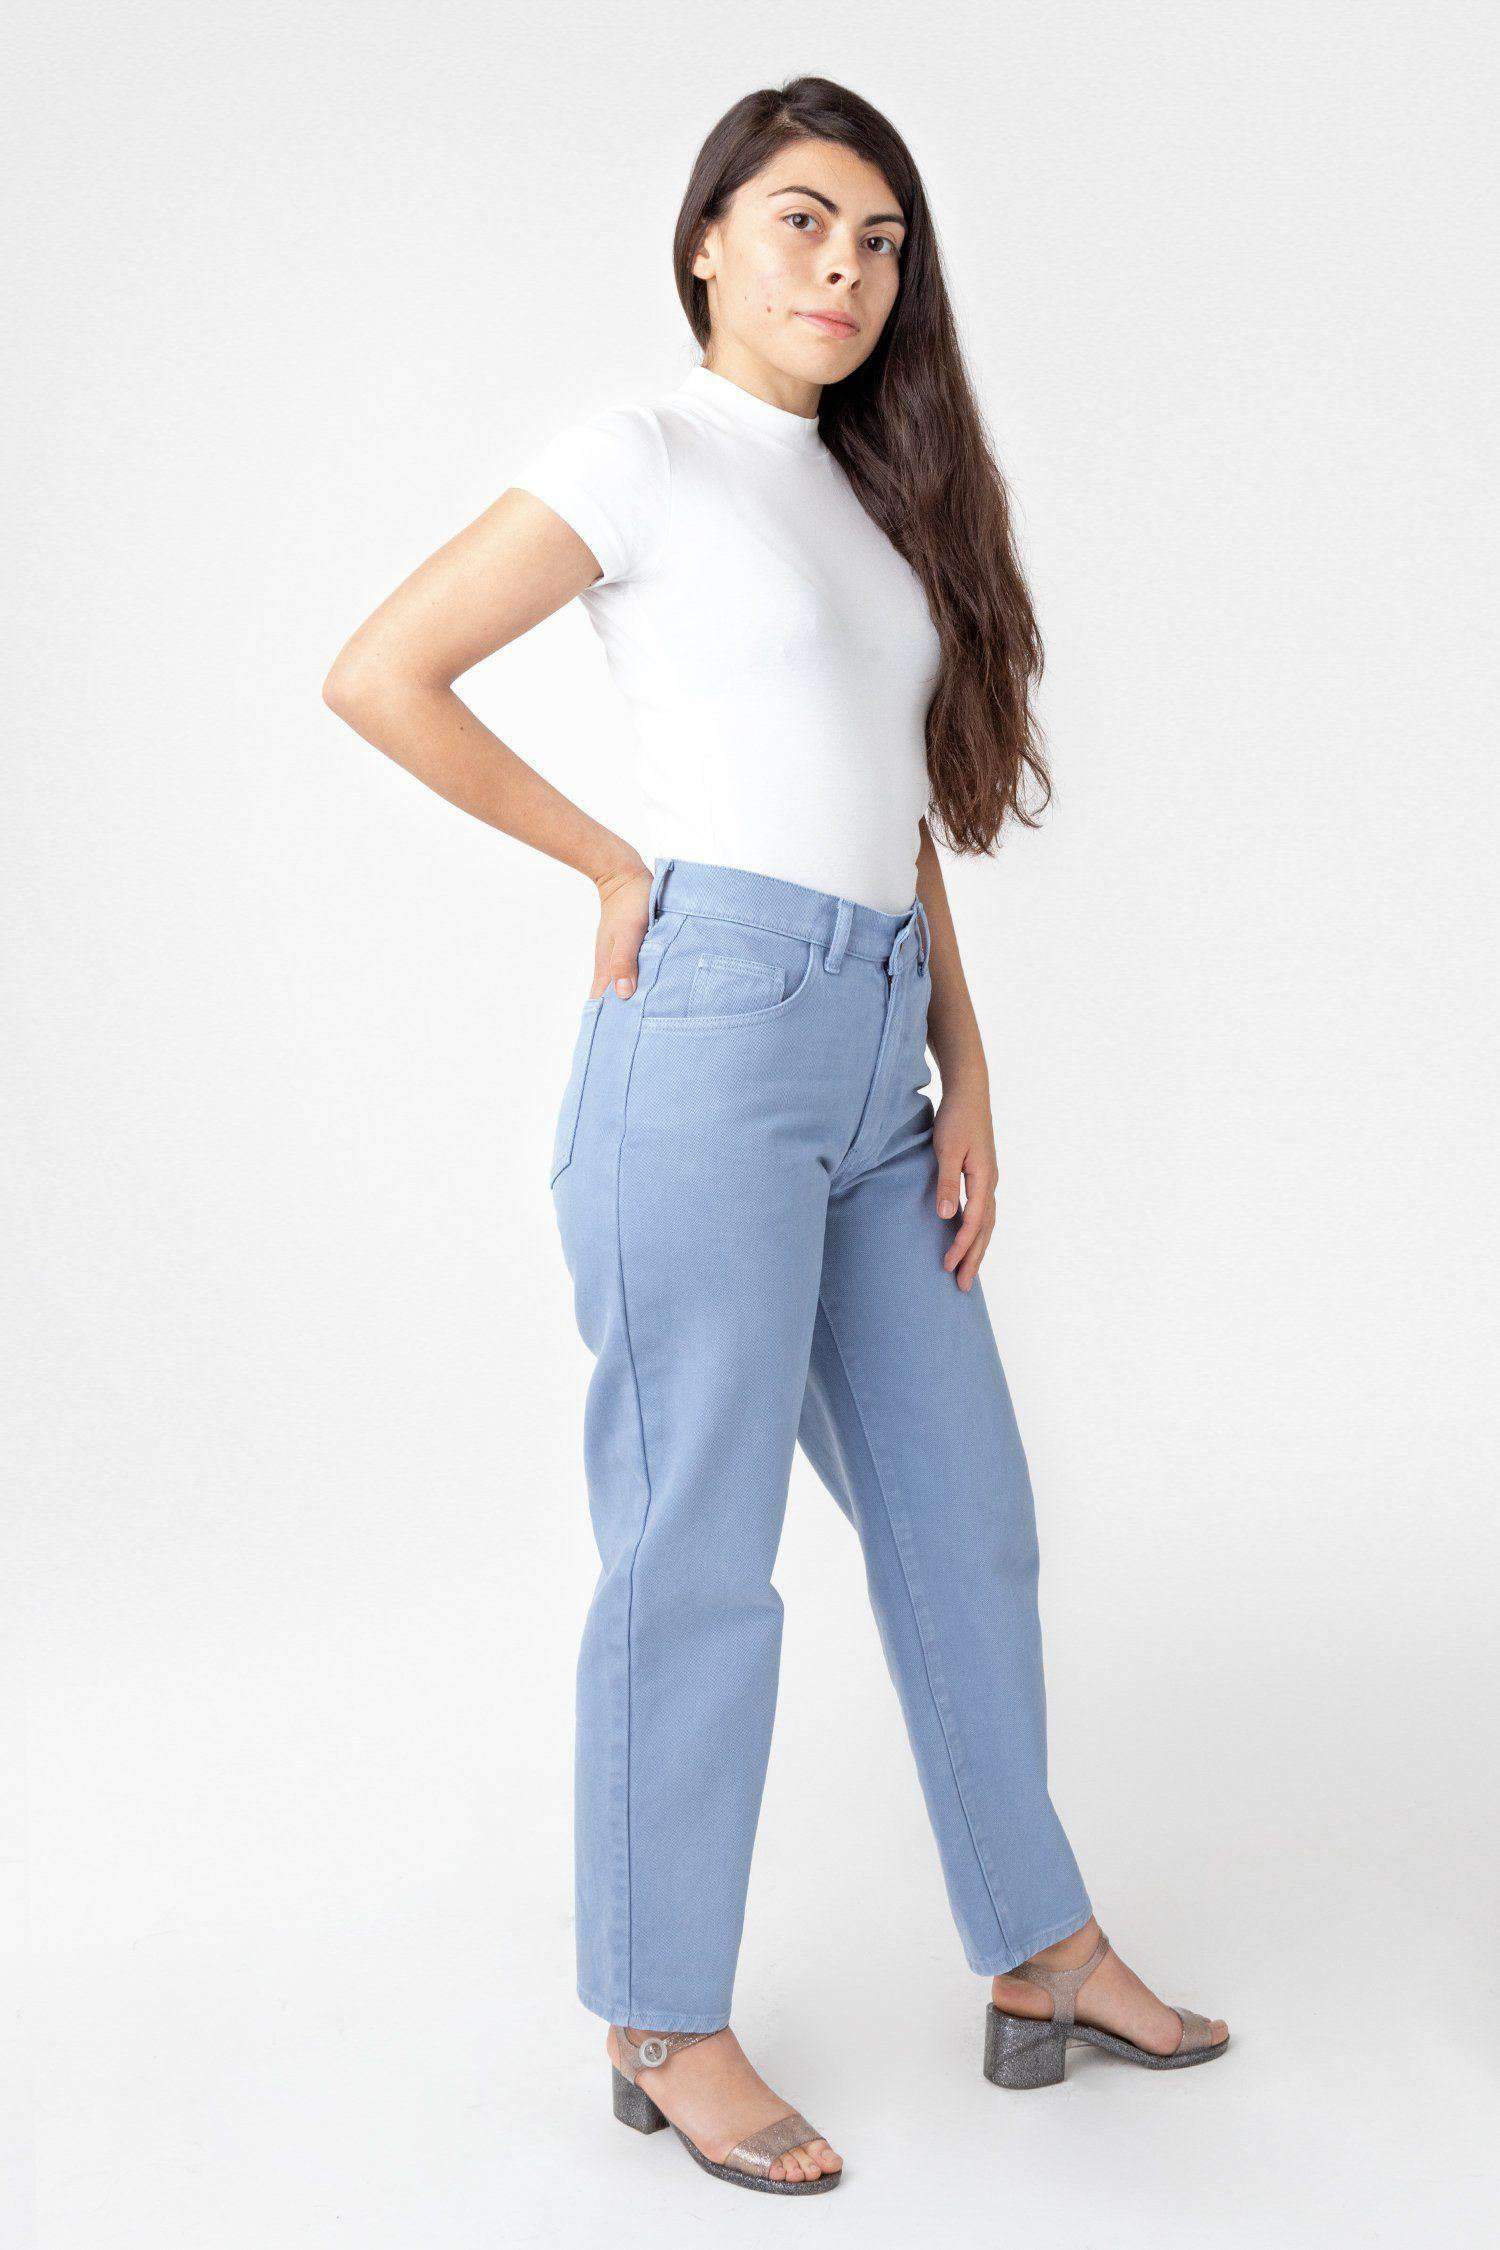 RBDW01GD - Garment Dye Women's Relaxed Fit Bull Denim Jean Jeans Los Angeles Apparel Clear Blue 25/28 